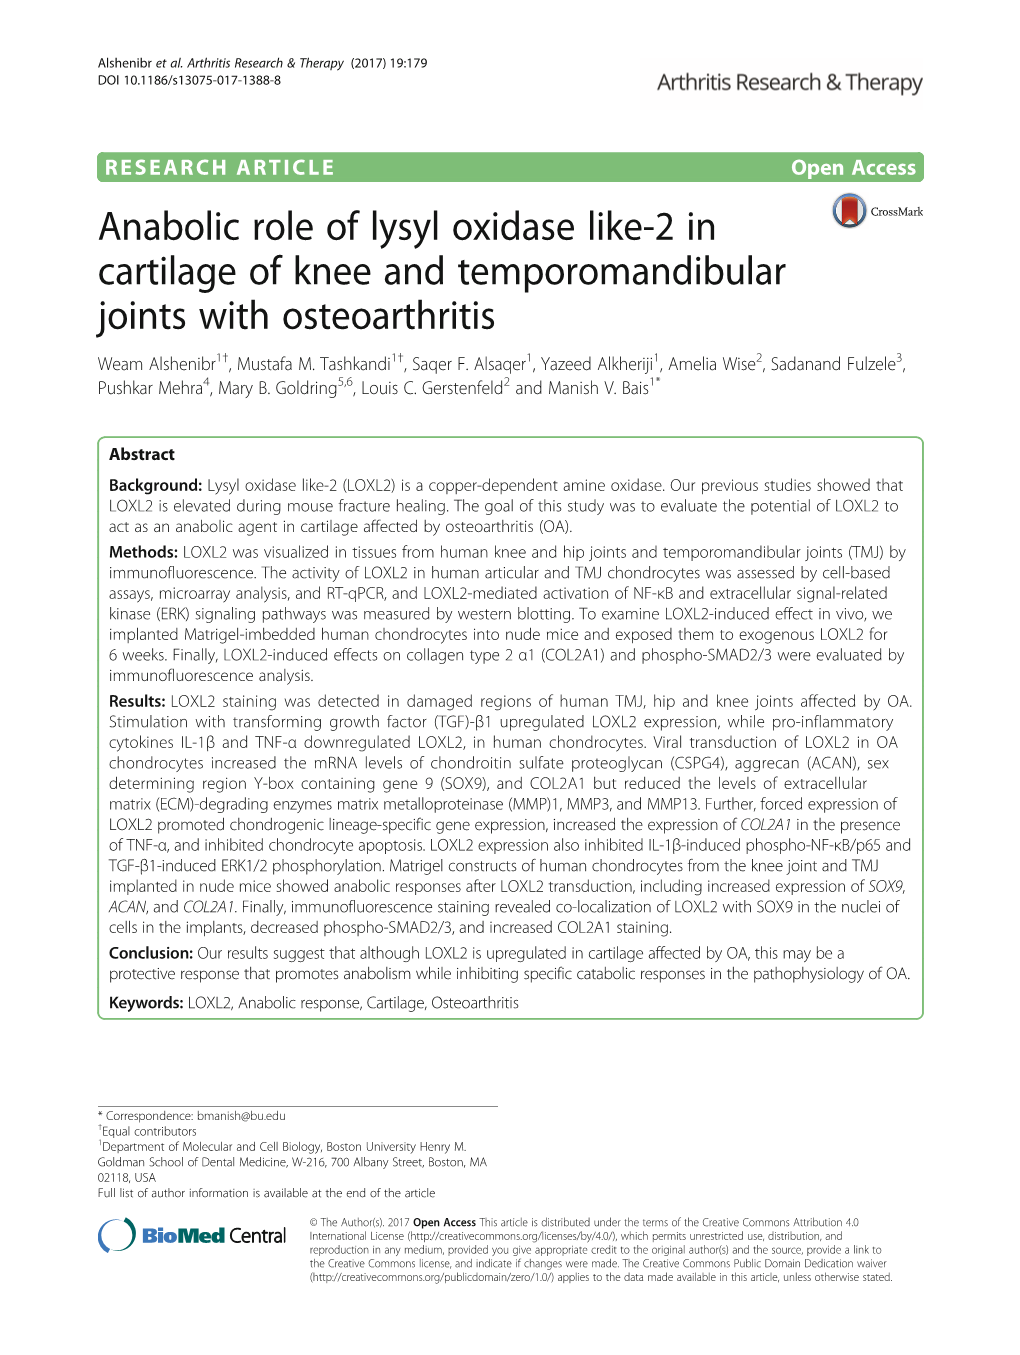 Anabolic Role of Lysyl Oxidase Like-2 in Cartilage of Knee and Temporomandibular Joints with Osteoarthritis Weam Alshenibr1†, Mustafa M